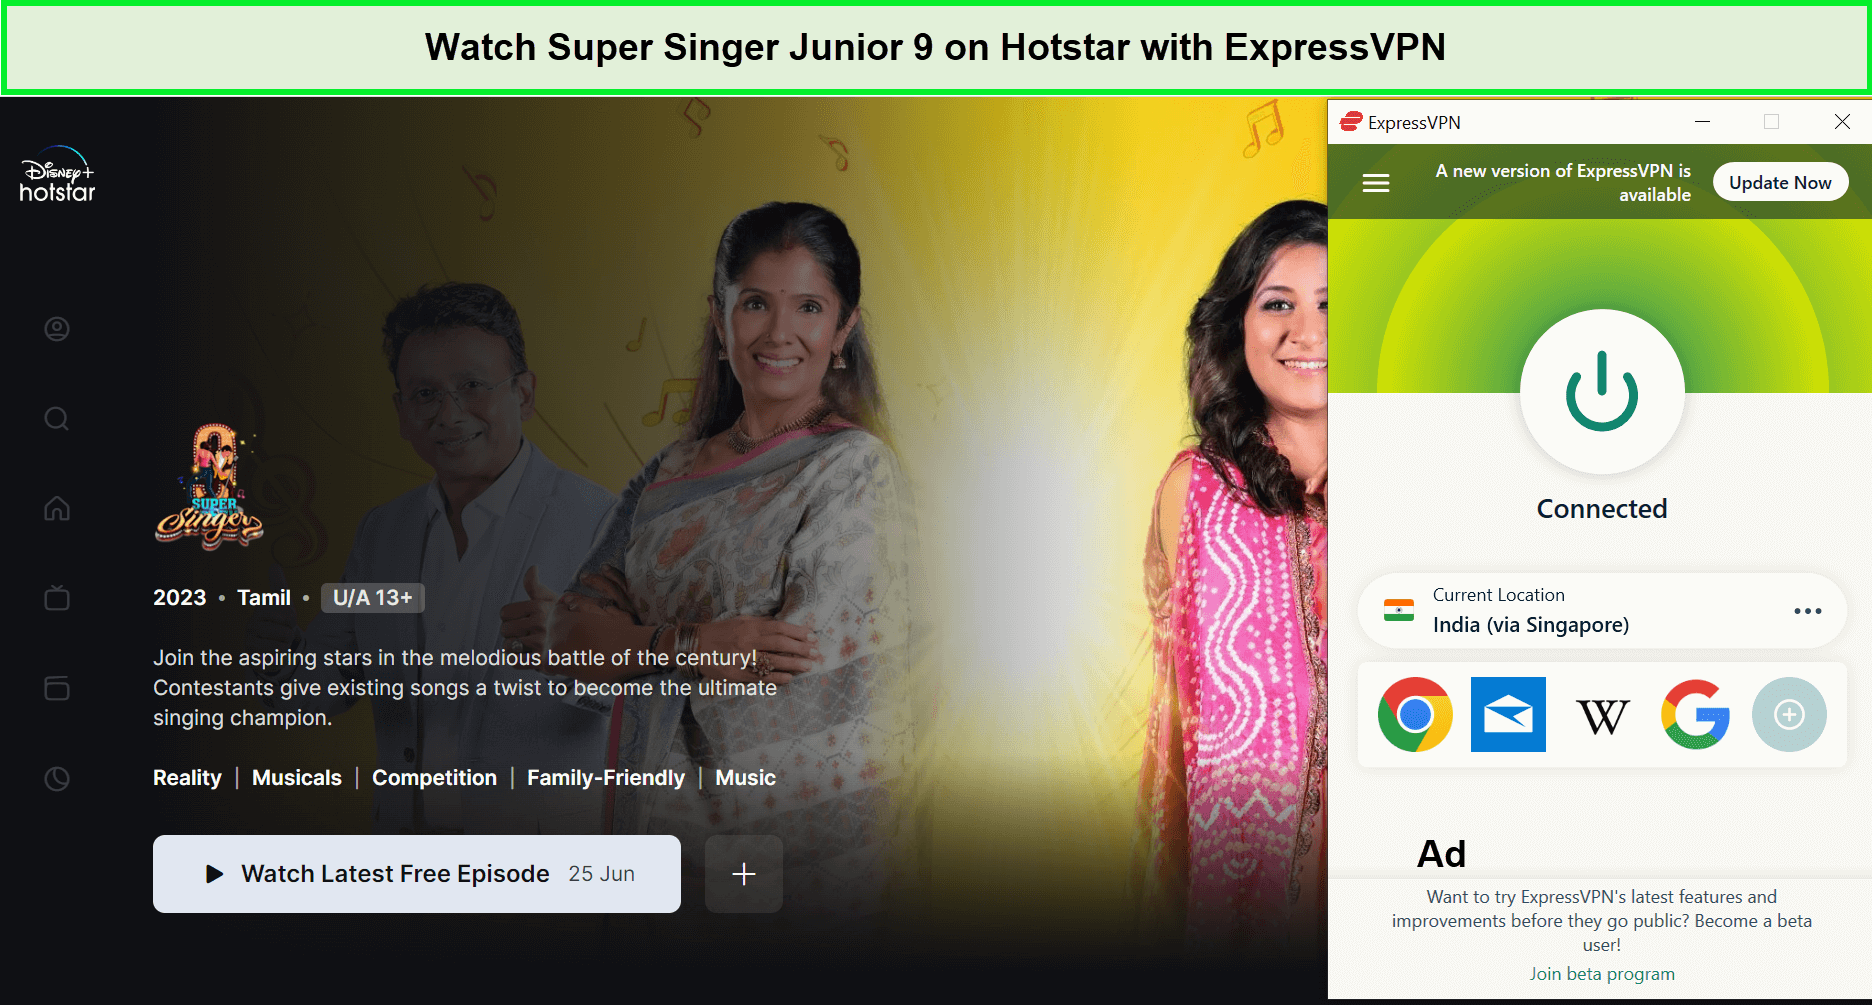 Watch-Super-Singer-Junior-9-outside-India-on-Hotstar-with-ExpressVPN